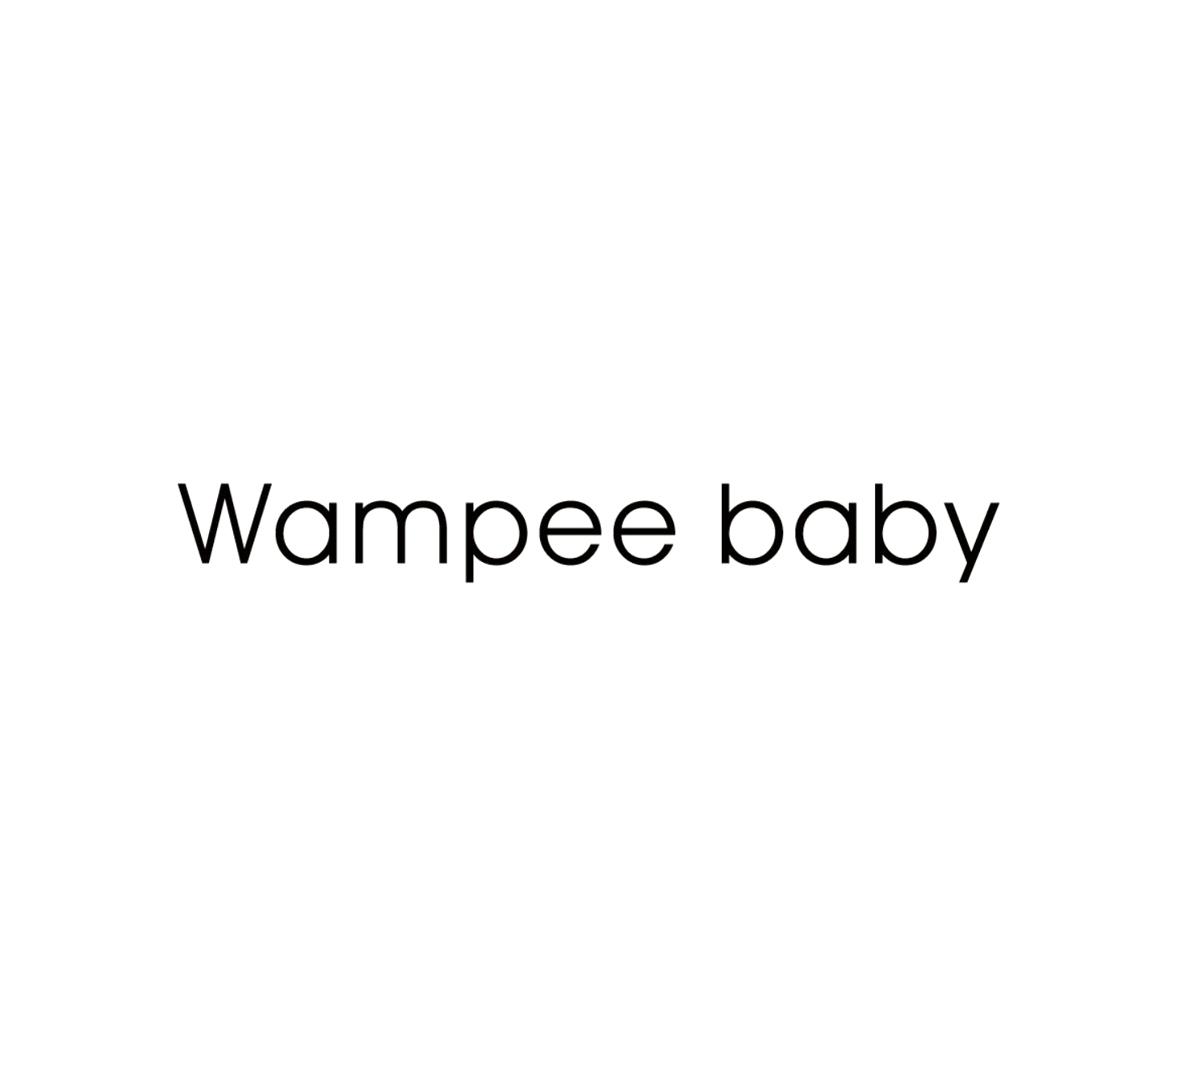 29类-食品WAMPEE BABY商标转让